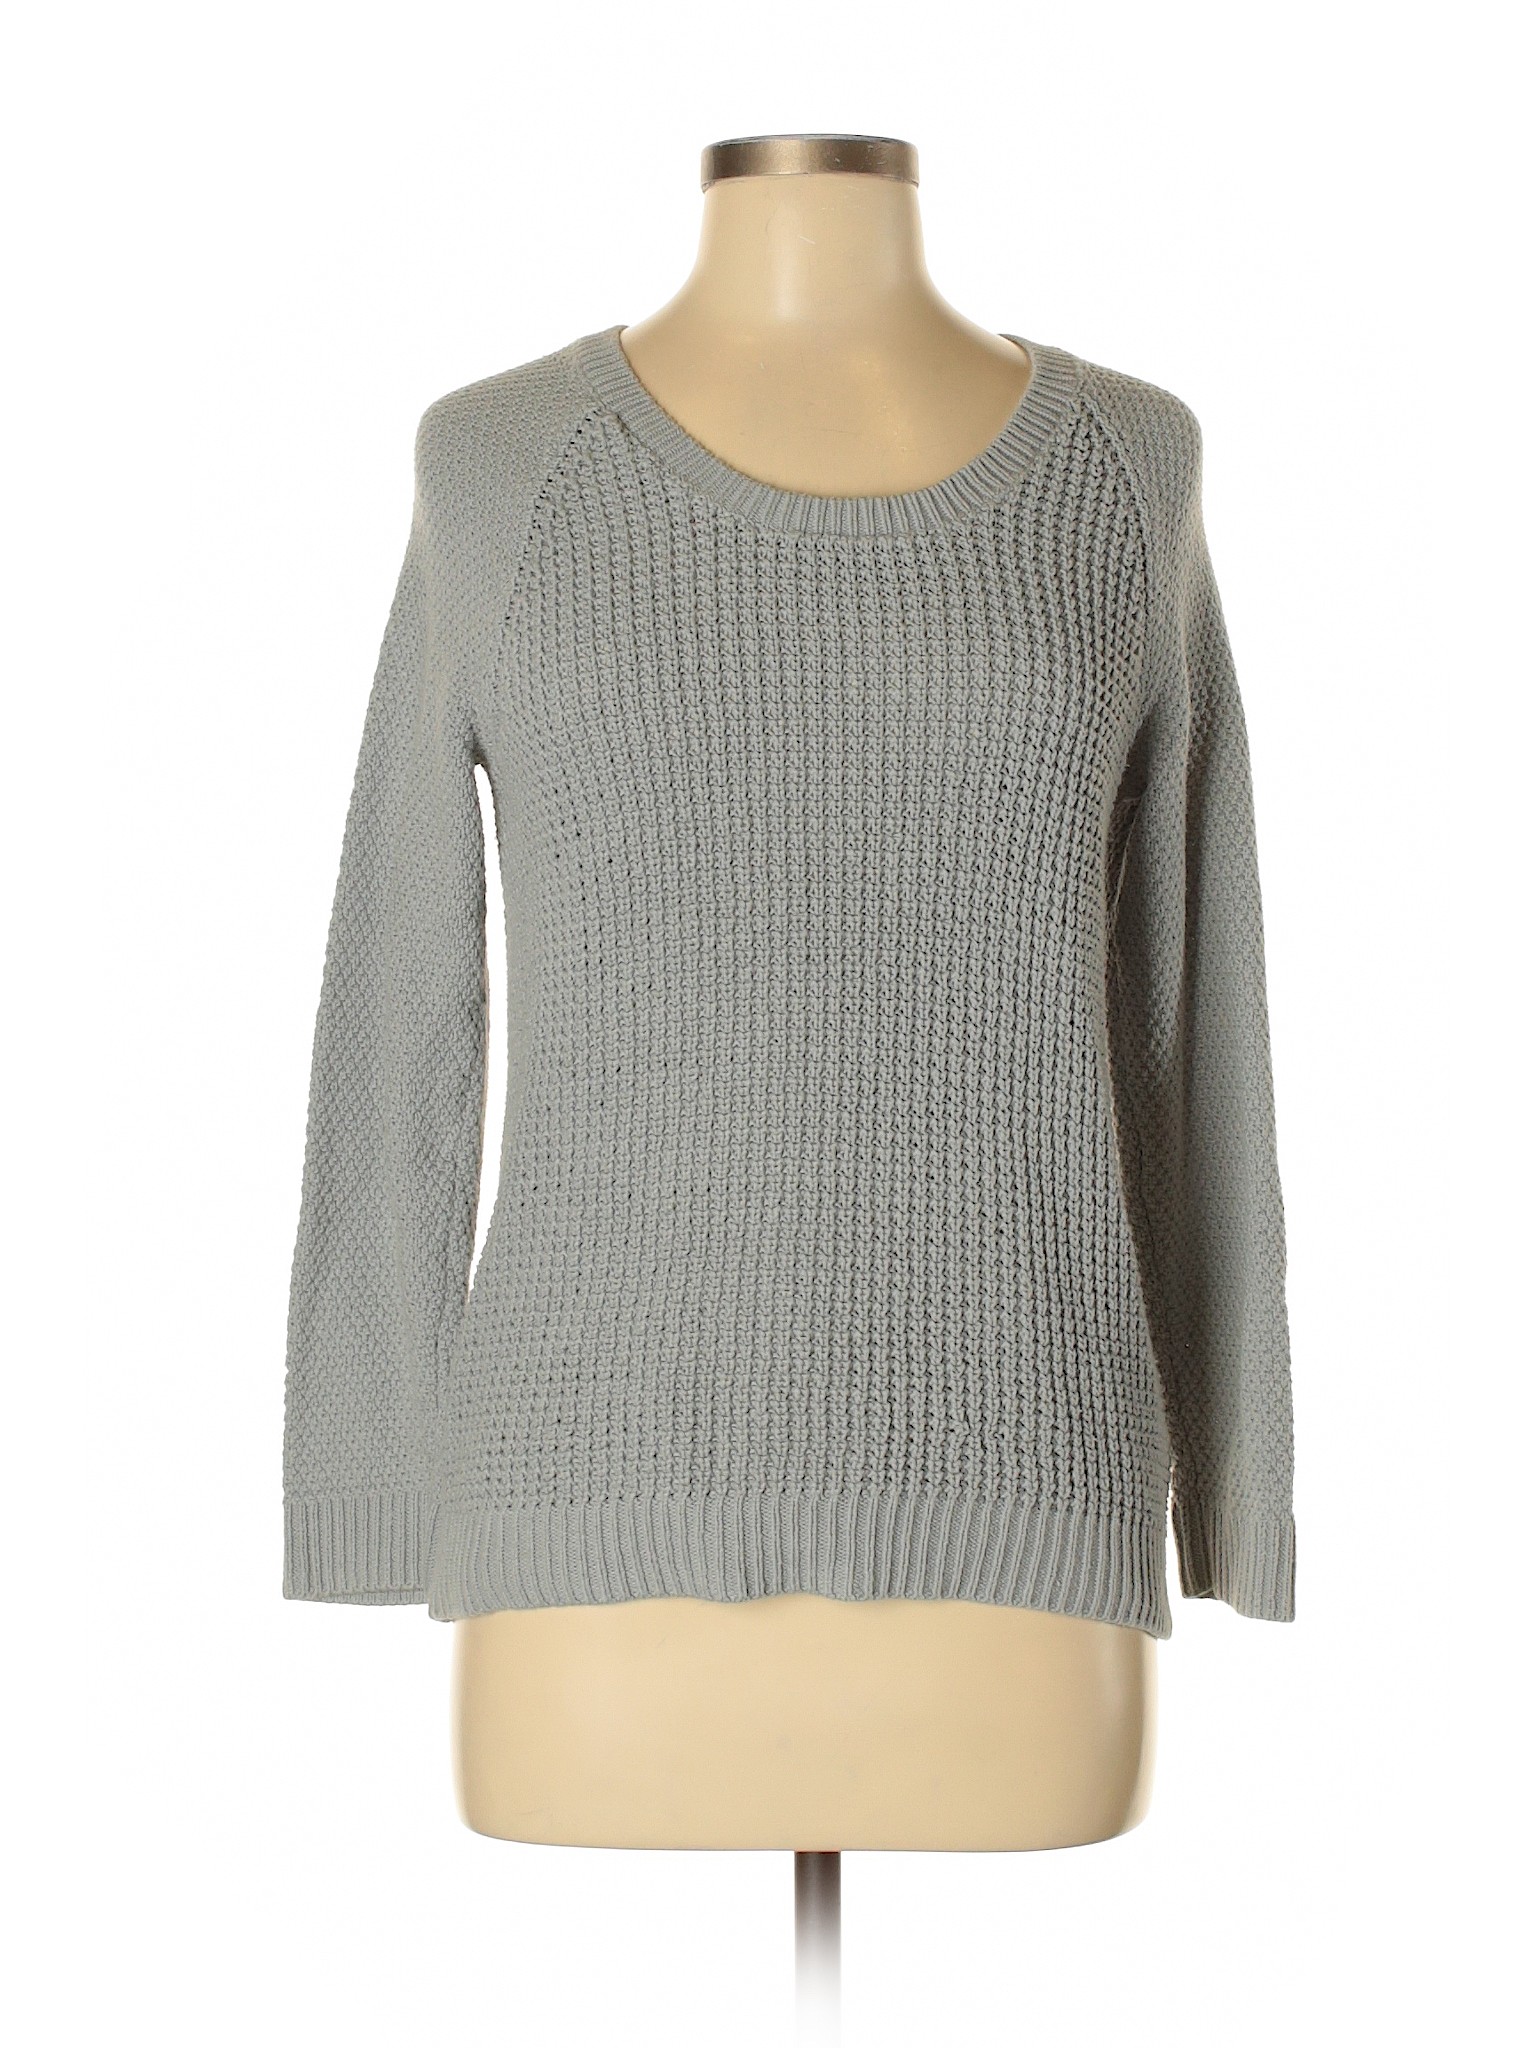 SONOMA life + style Women Gray Pullover Sweater M | eBay